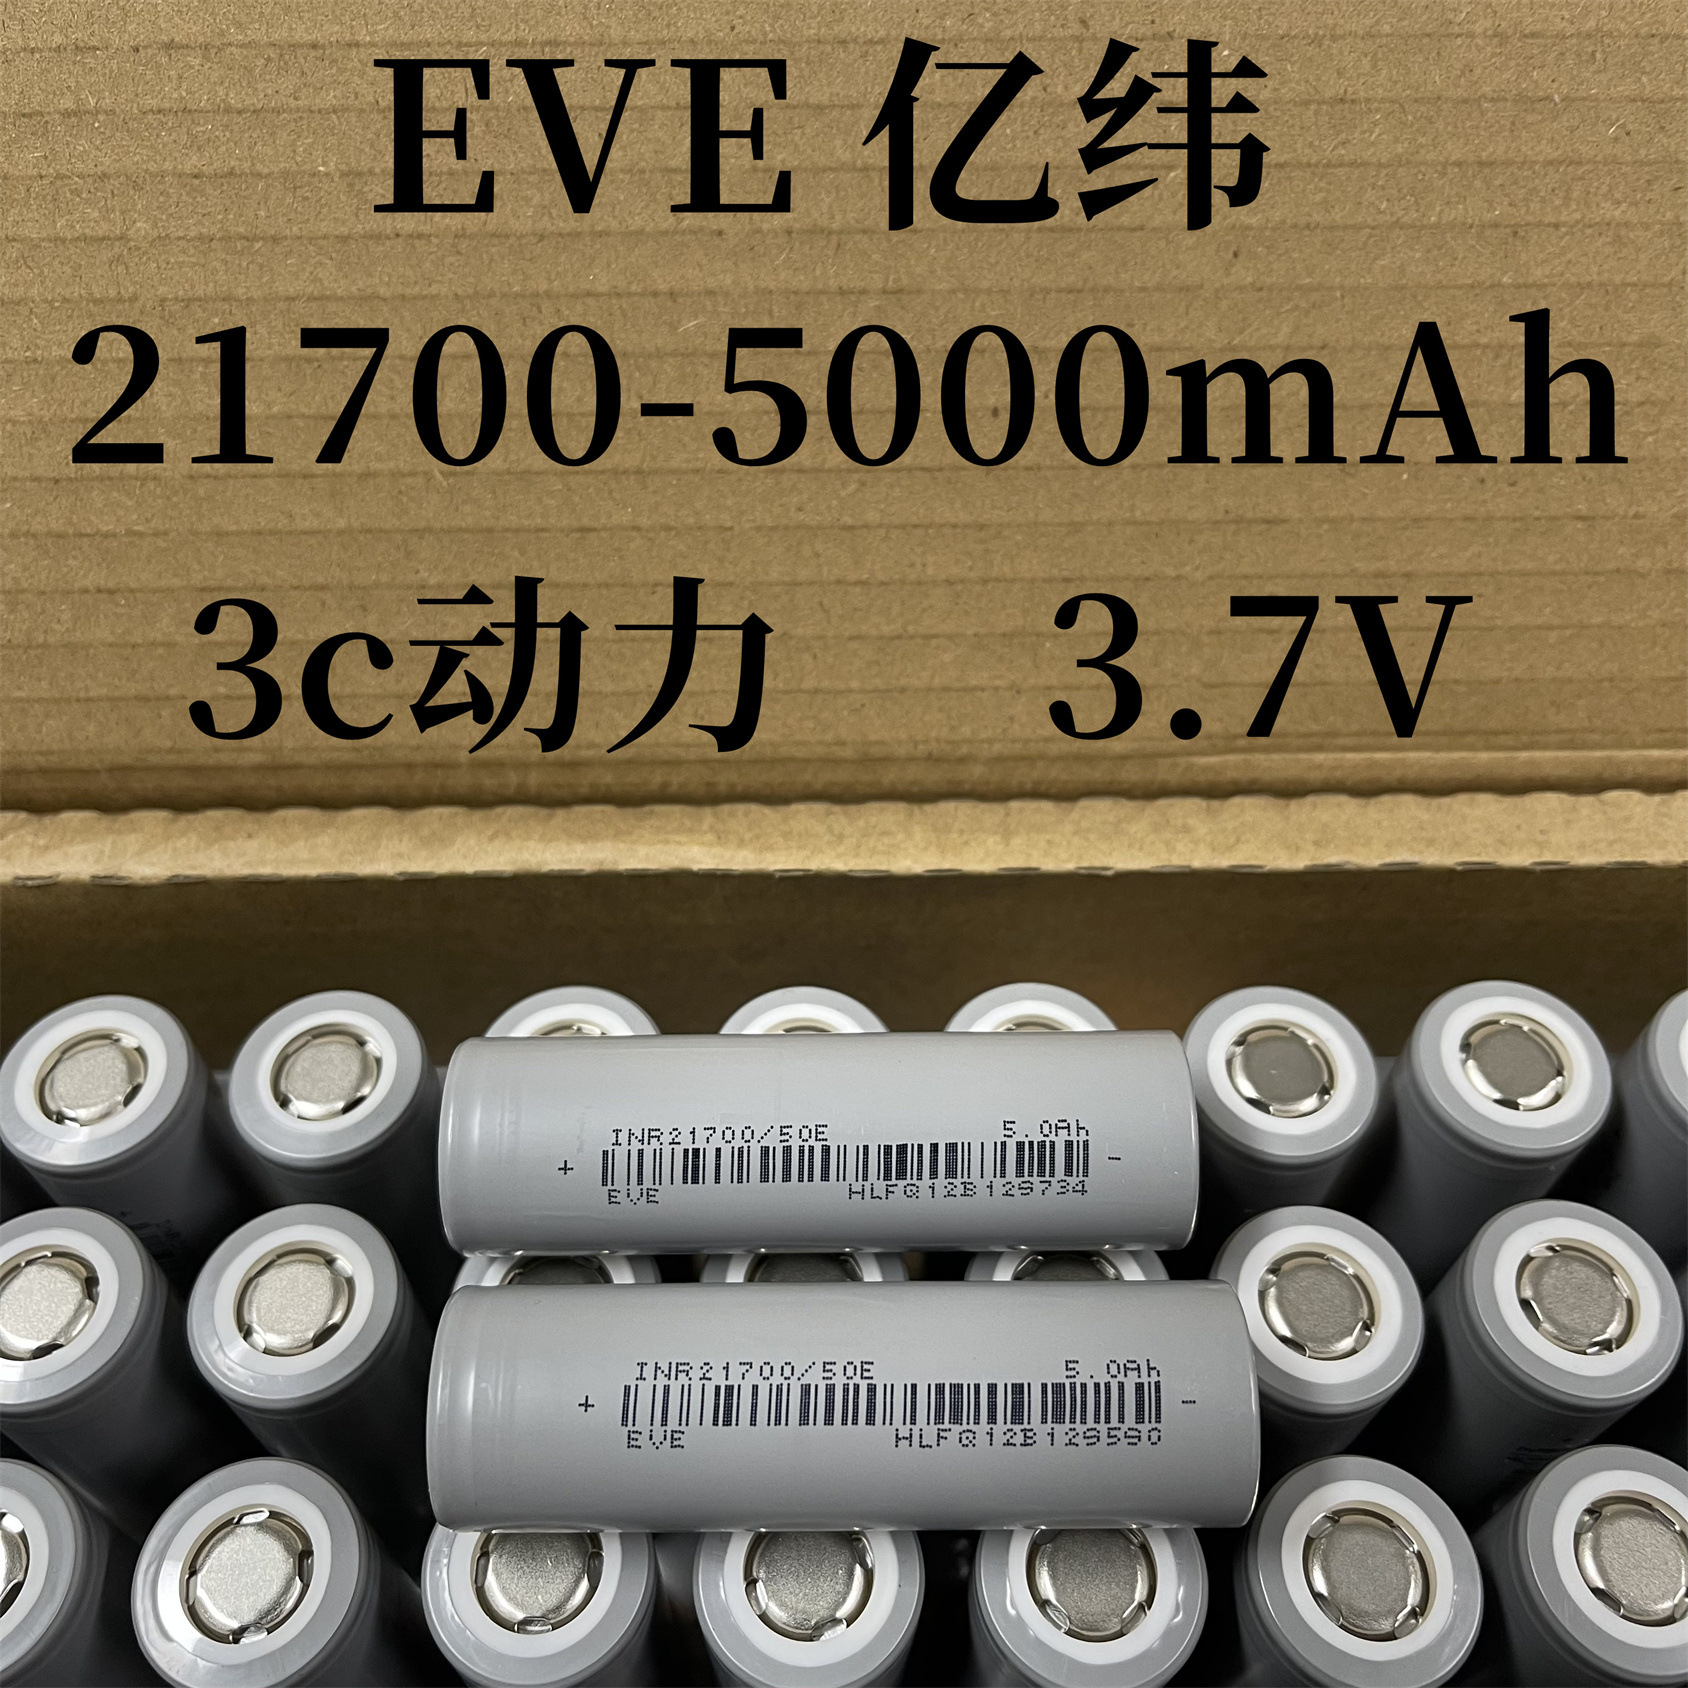 EVE亿纬锂电池50E 21700-5000mAh 3C动力 电动车 电动工具 电池组